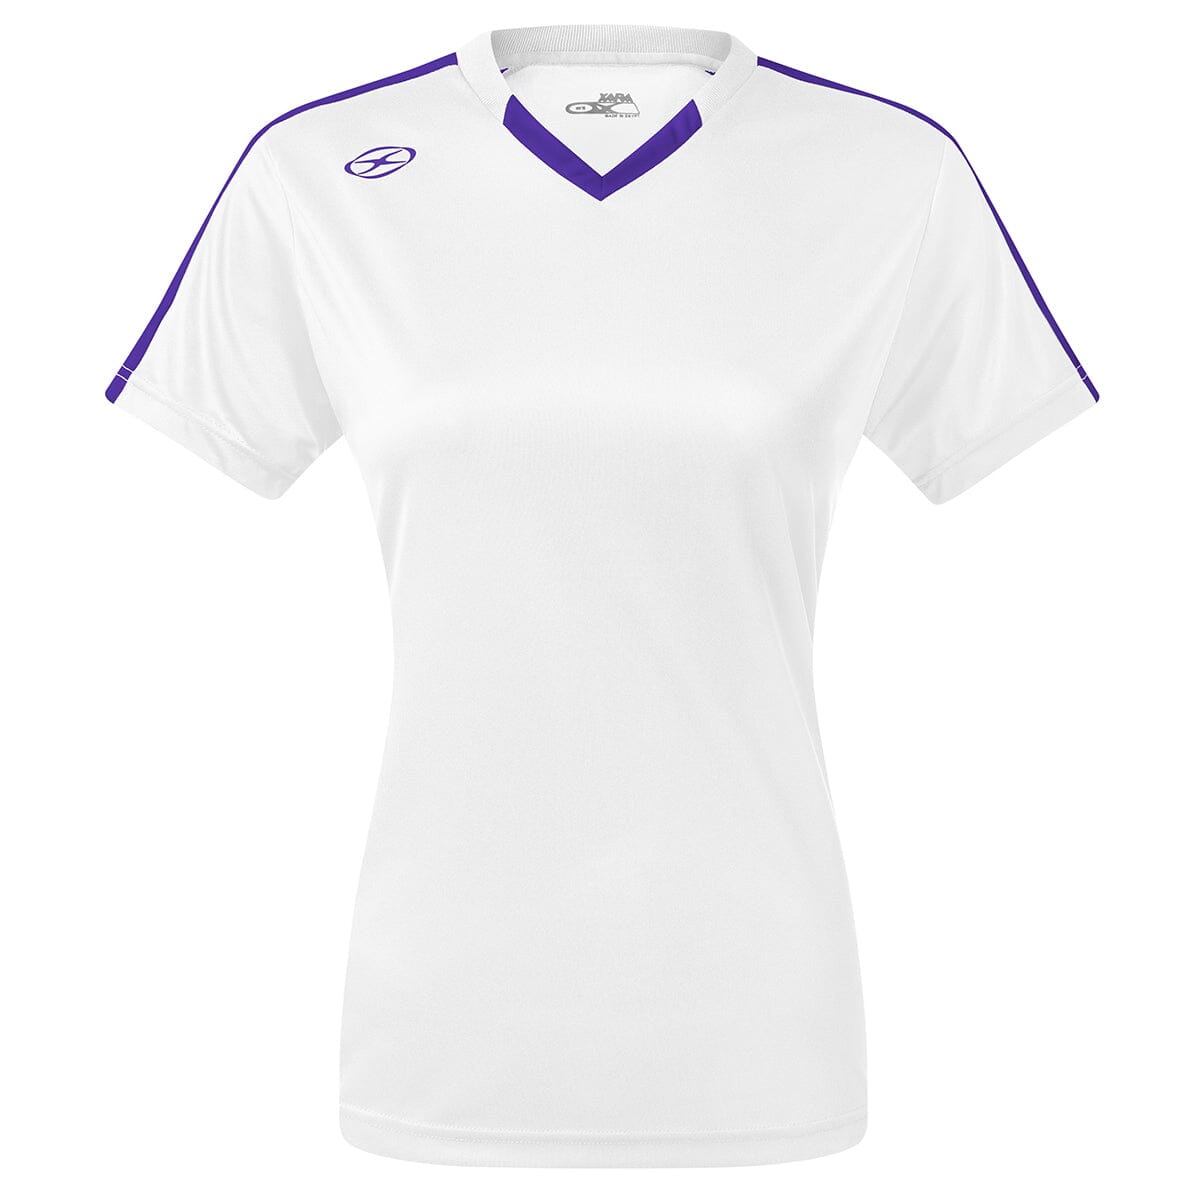 Britannia Jersey - Away Colors - Female Shirt Xara Soccer White/Purple Womens Small 